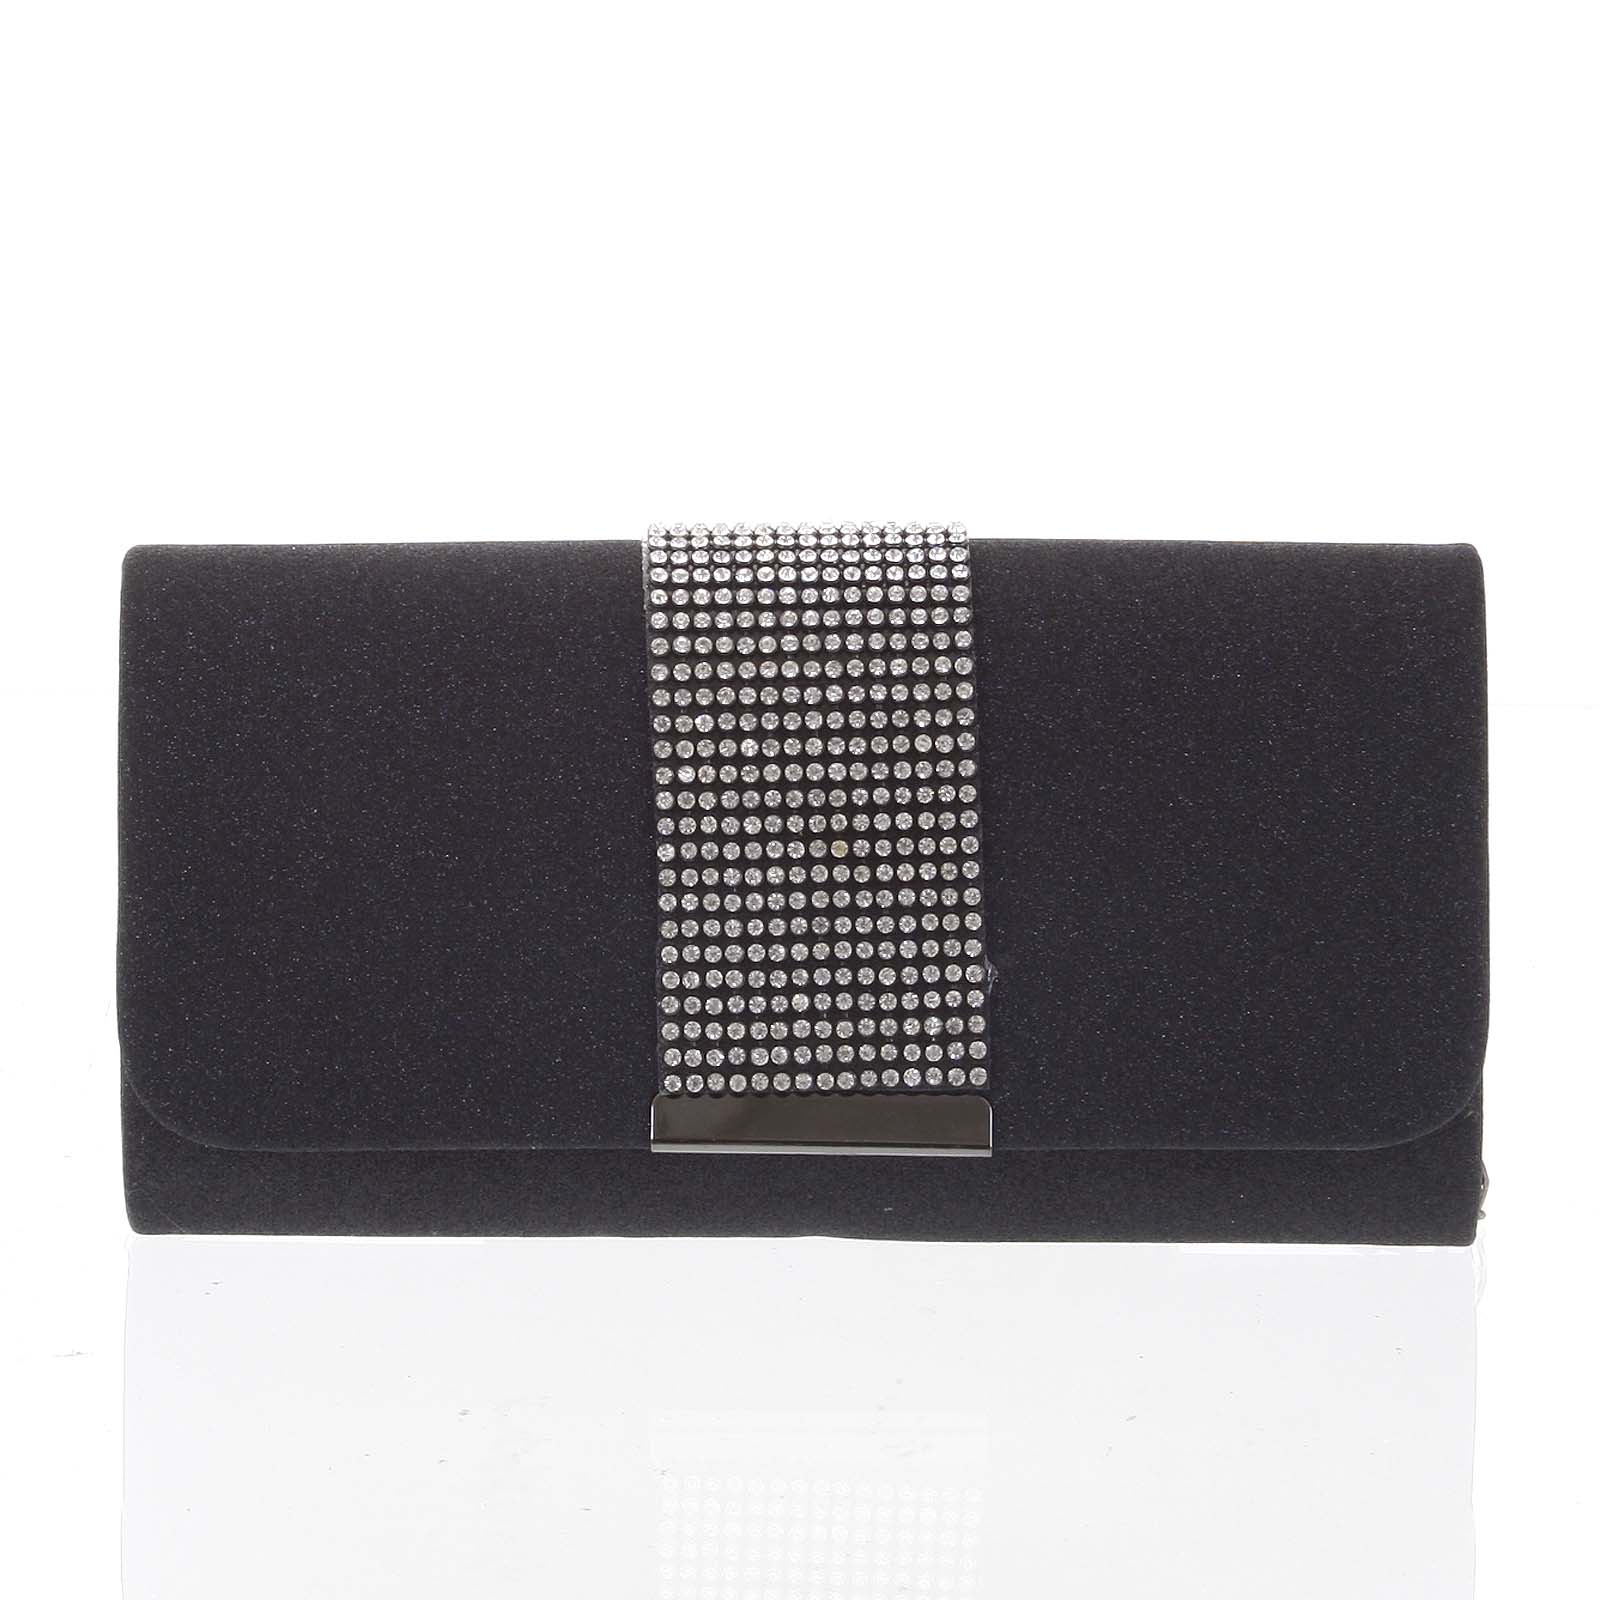 Luxusná diamantová čierna listová kabelka s glittrom - Delami D699